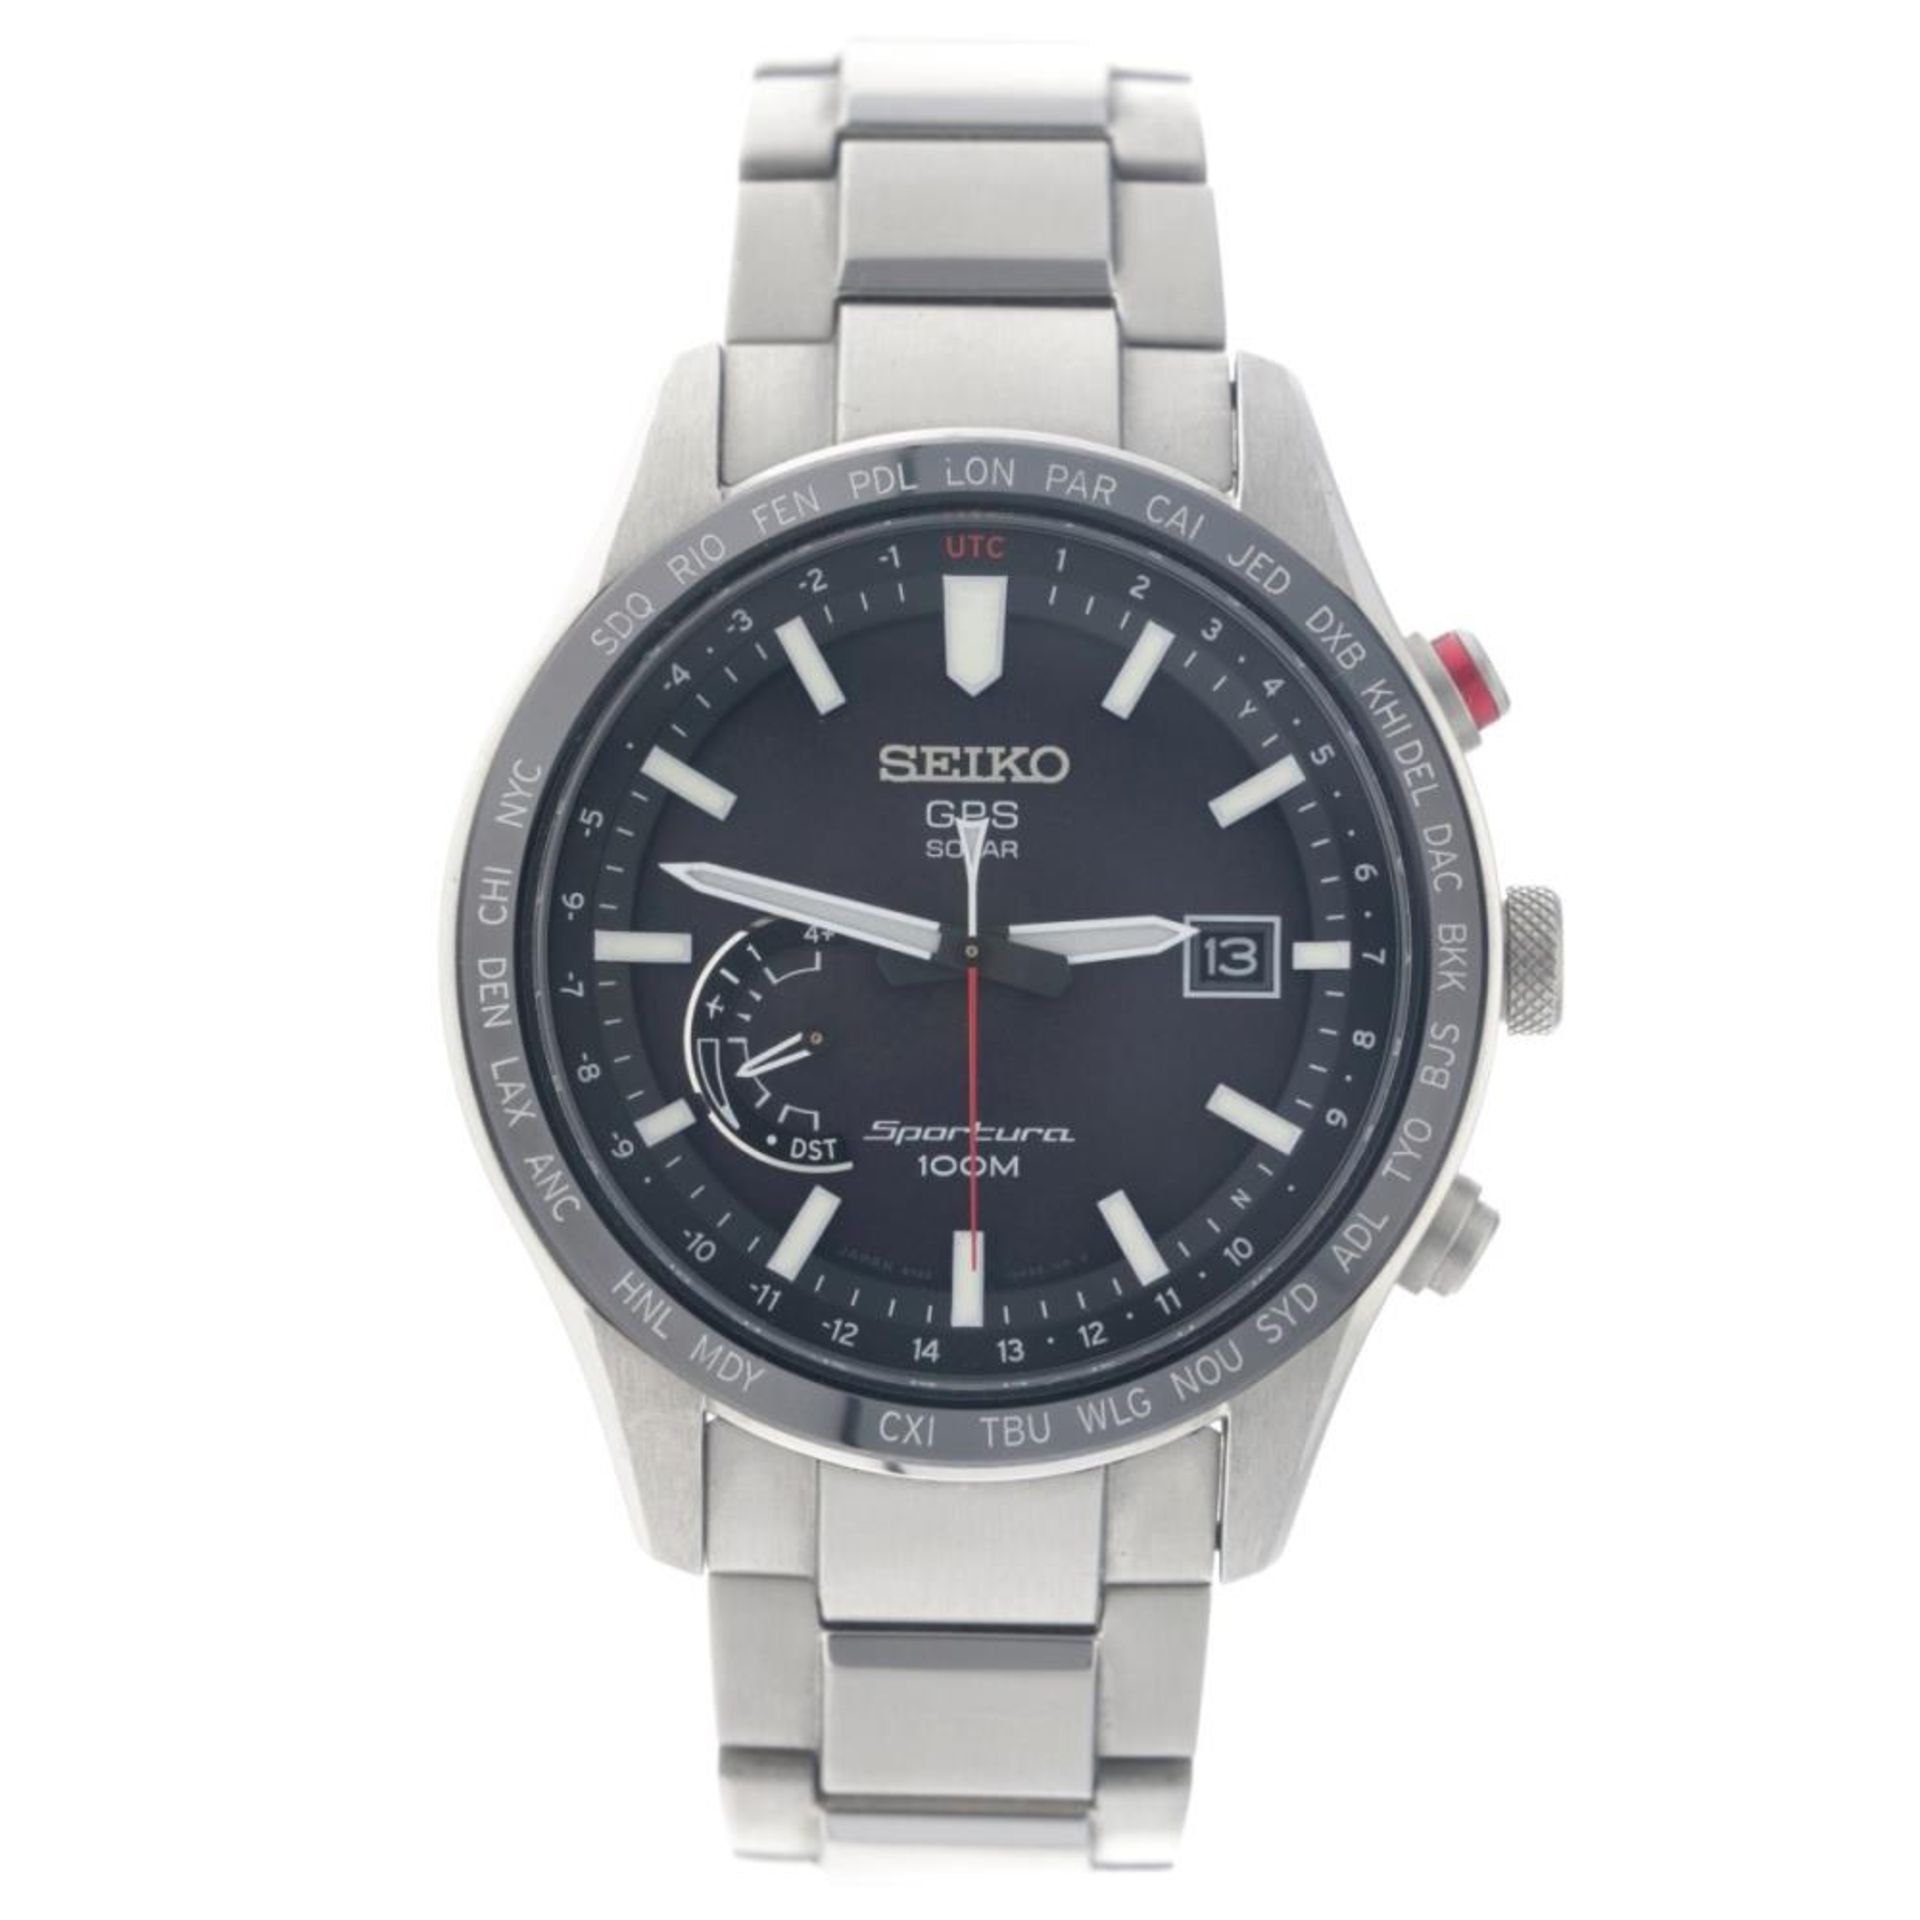 Seiko Sportura World Time GPS Solar SSF003 - Men's watch - approx. 2018.